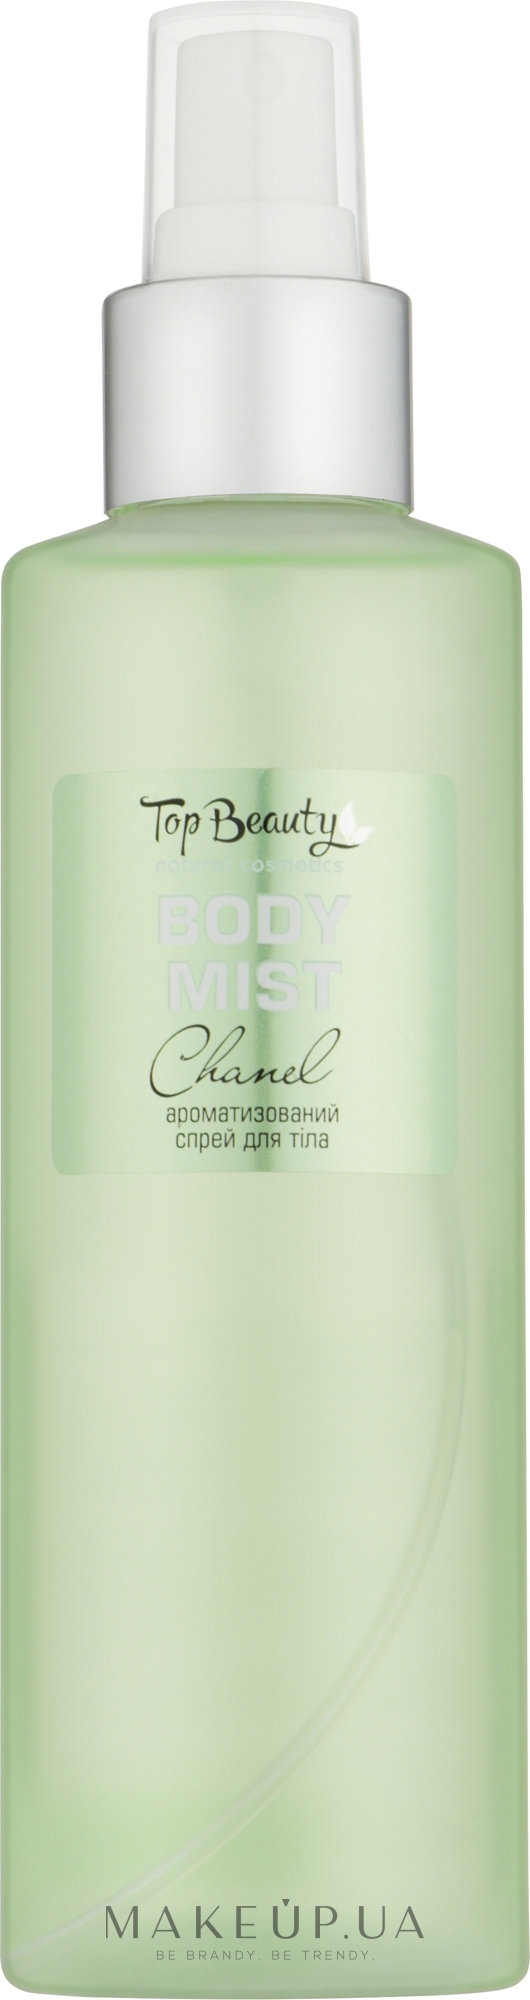 Парфюмированный мист для тела "Chanel" - Top Beauty Body Mist Chanel — фото 200ml